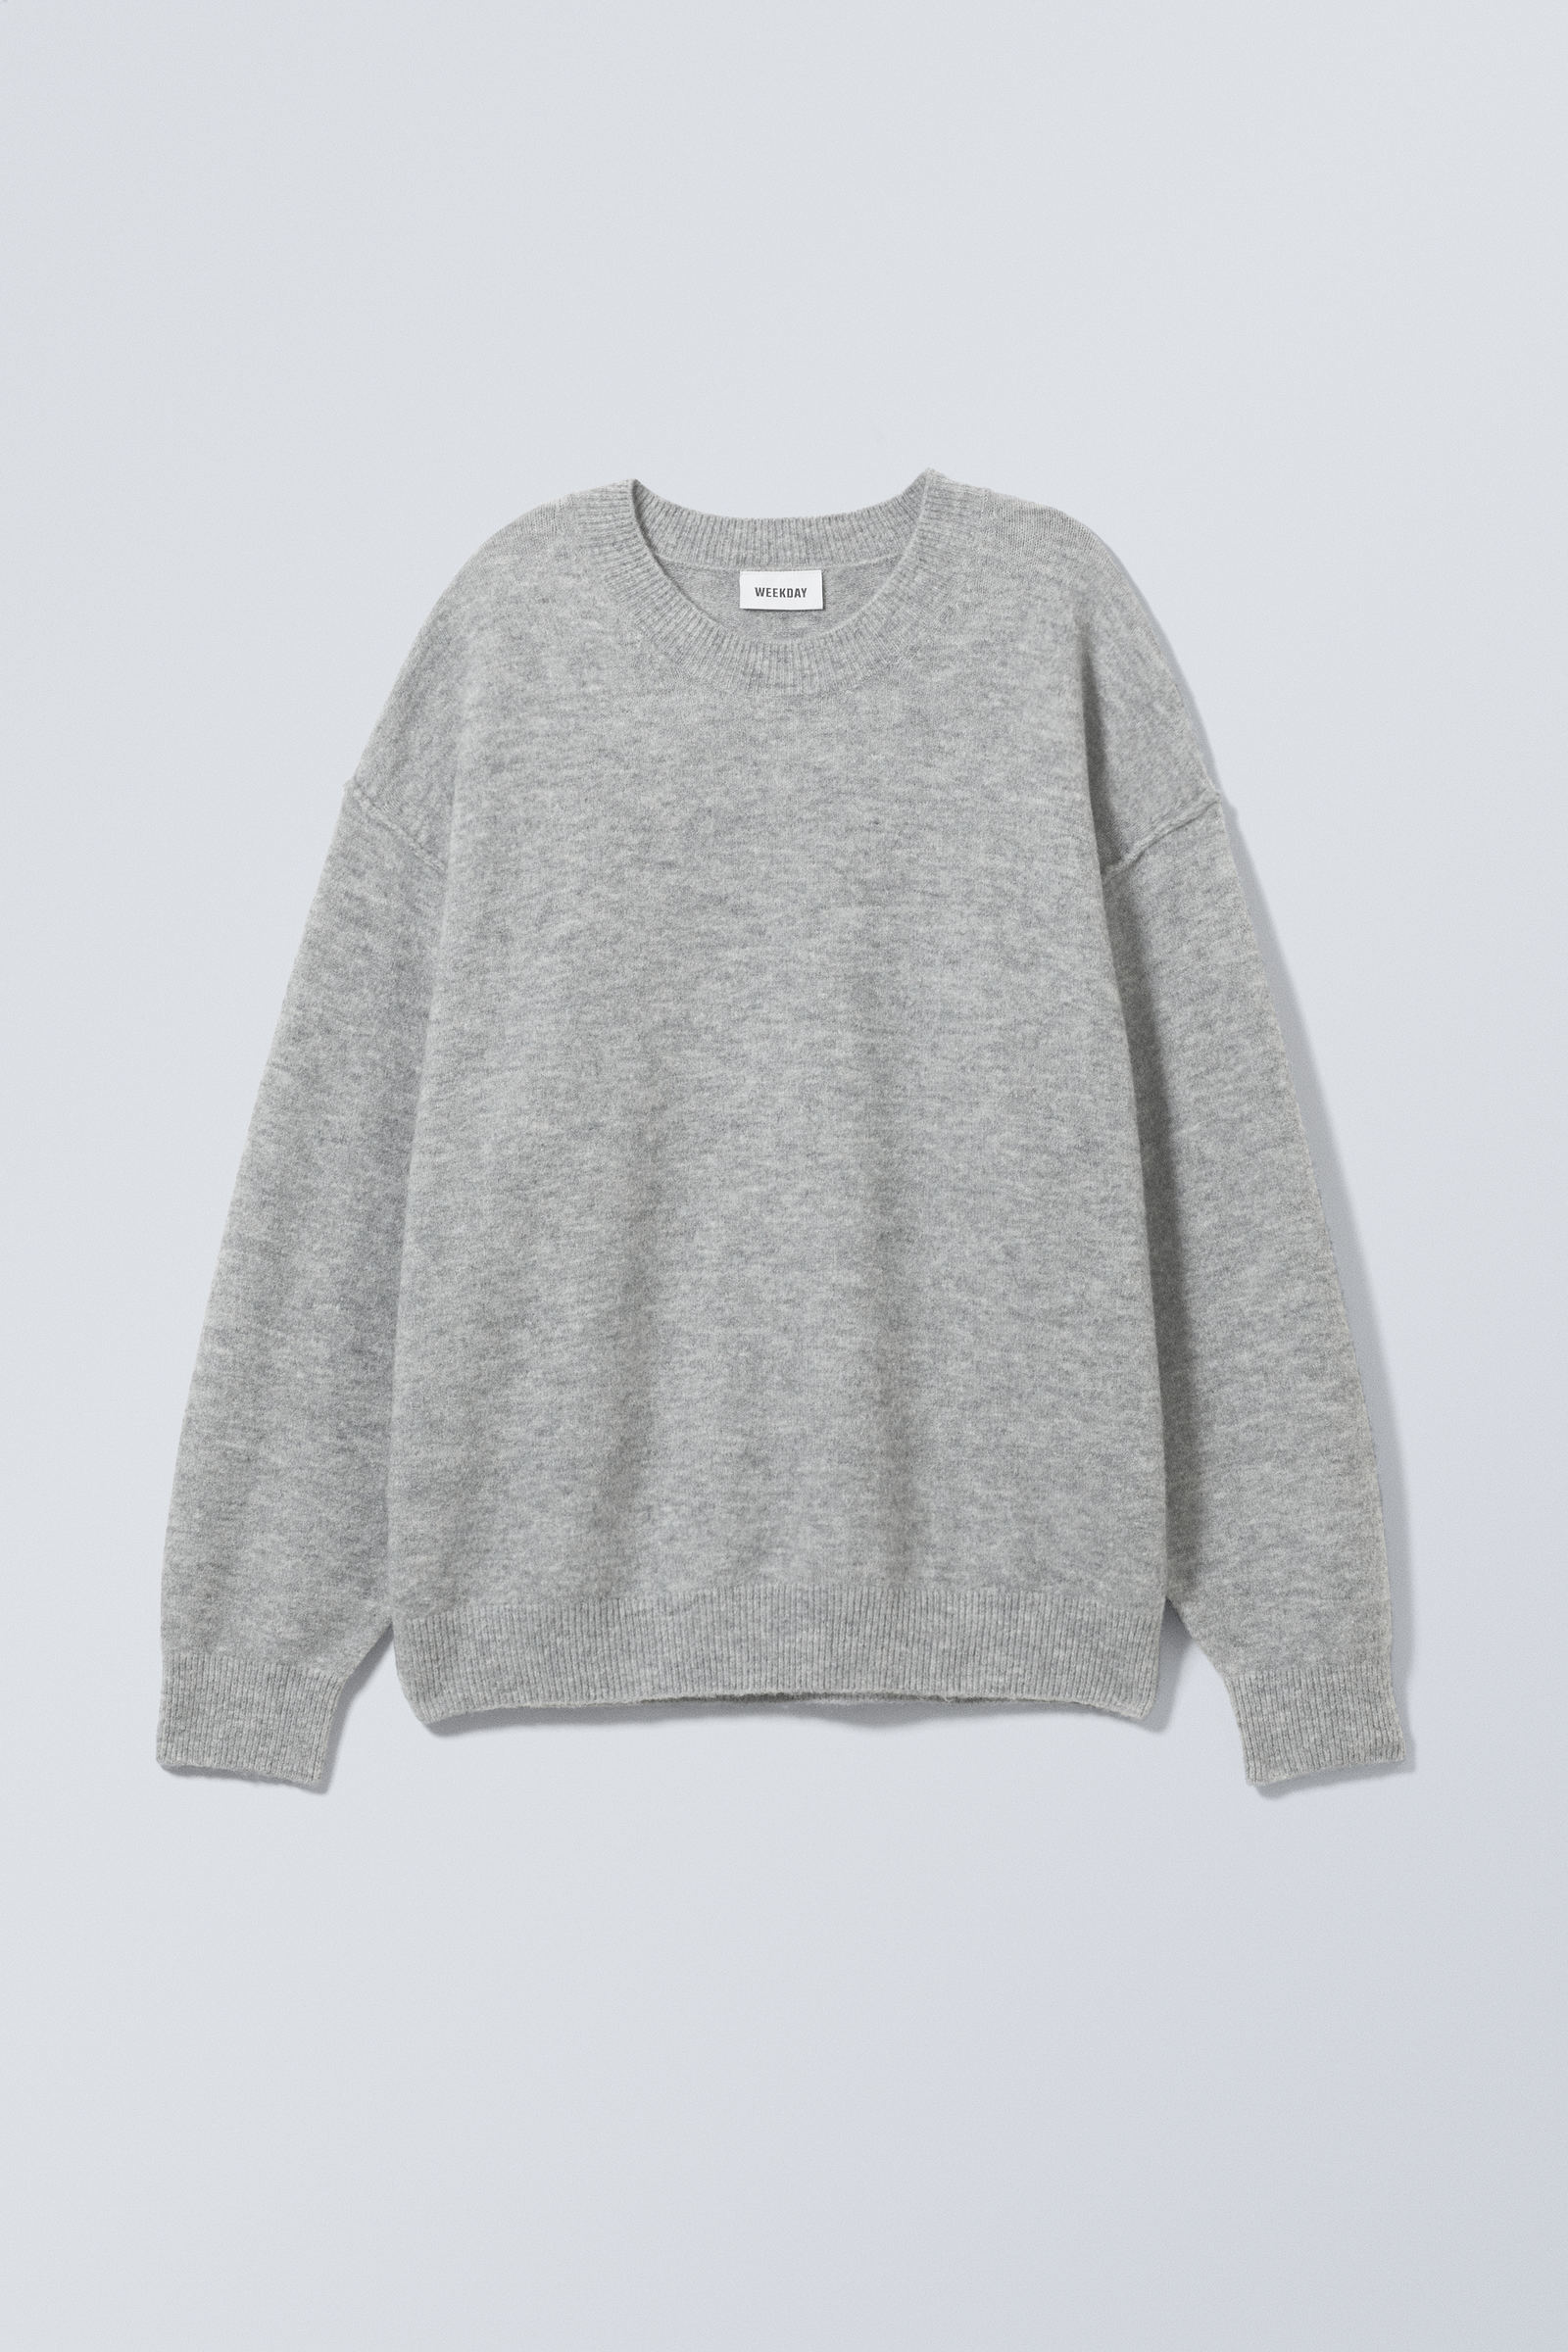 Dusty Grey - Annie Knit Sweater - 1